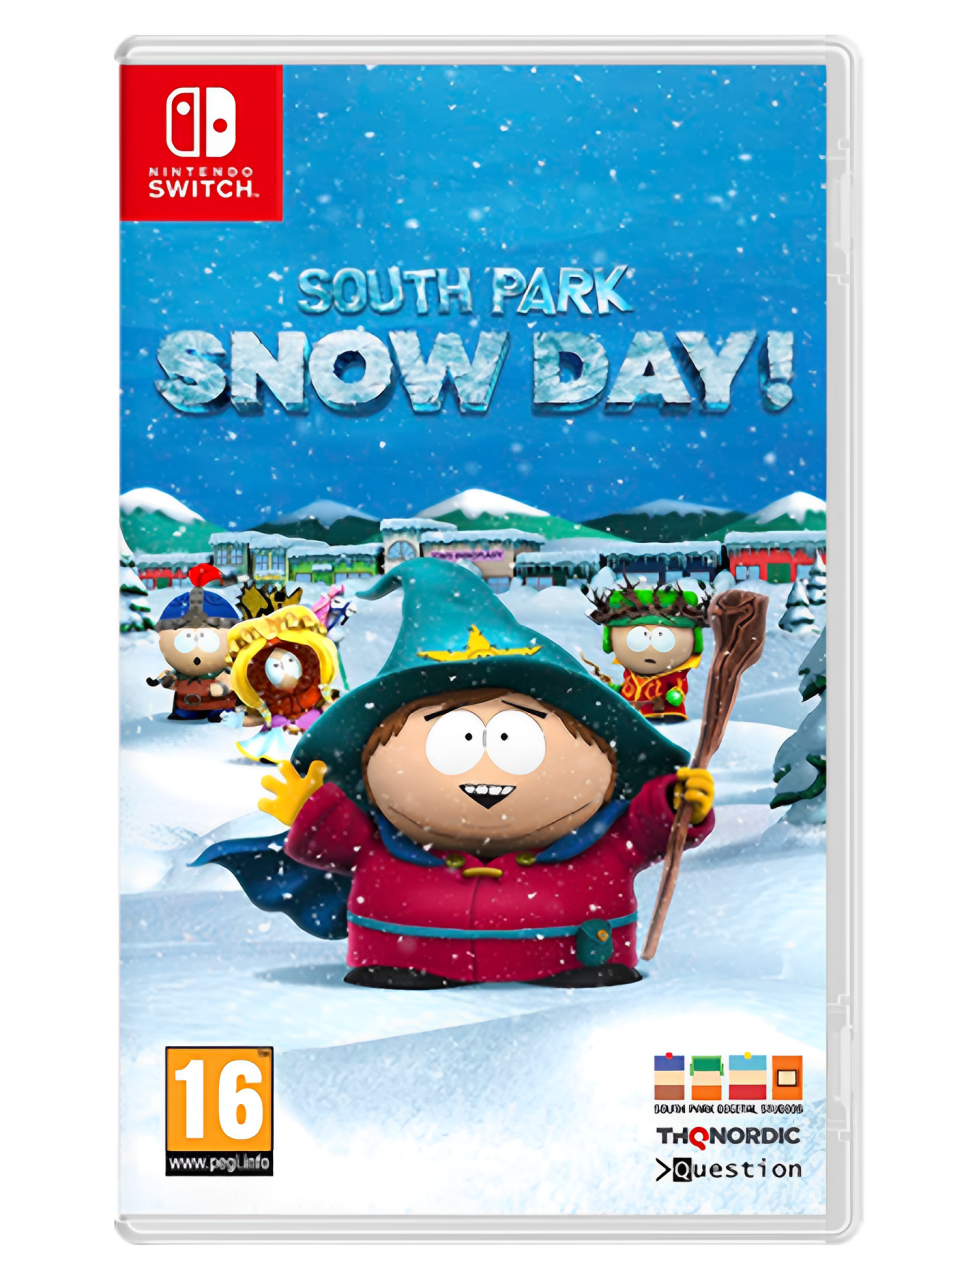 South Park: Snow Day nintendo